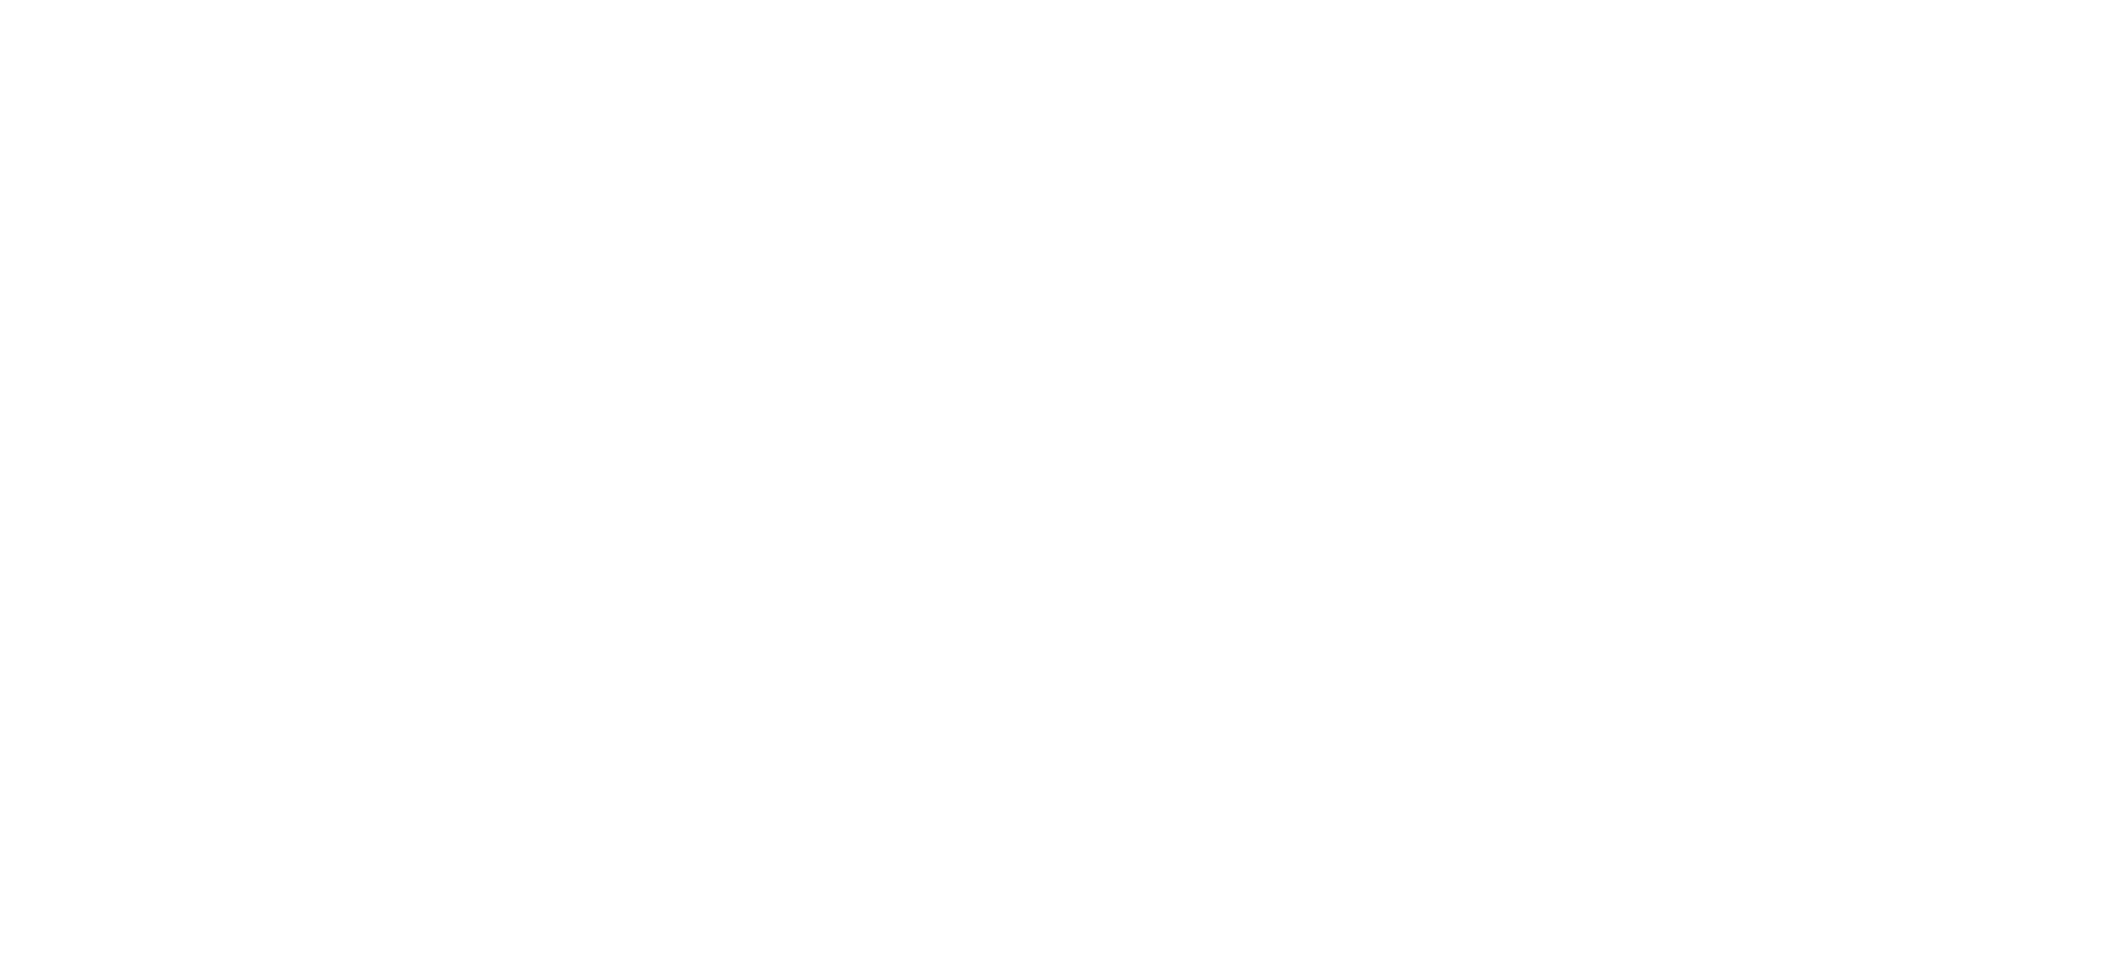 Face the Beast